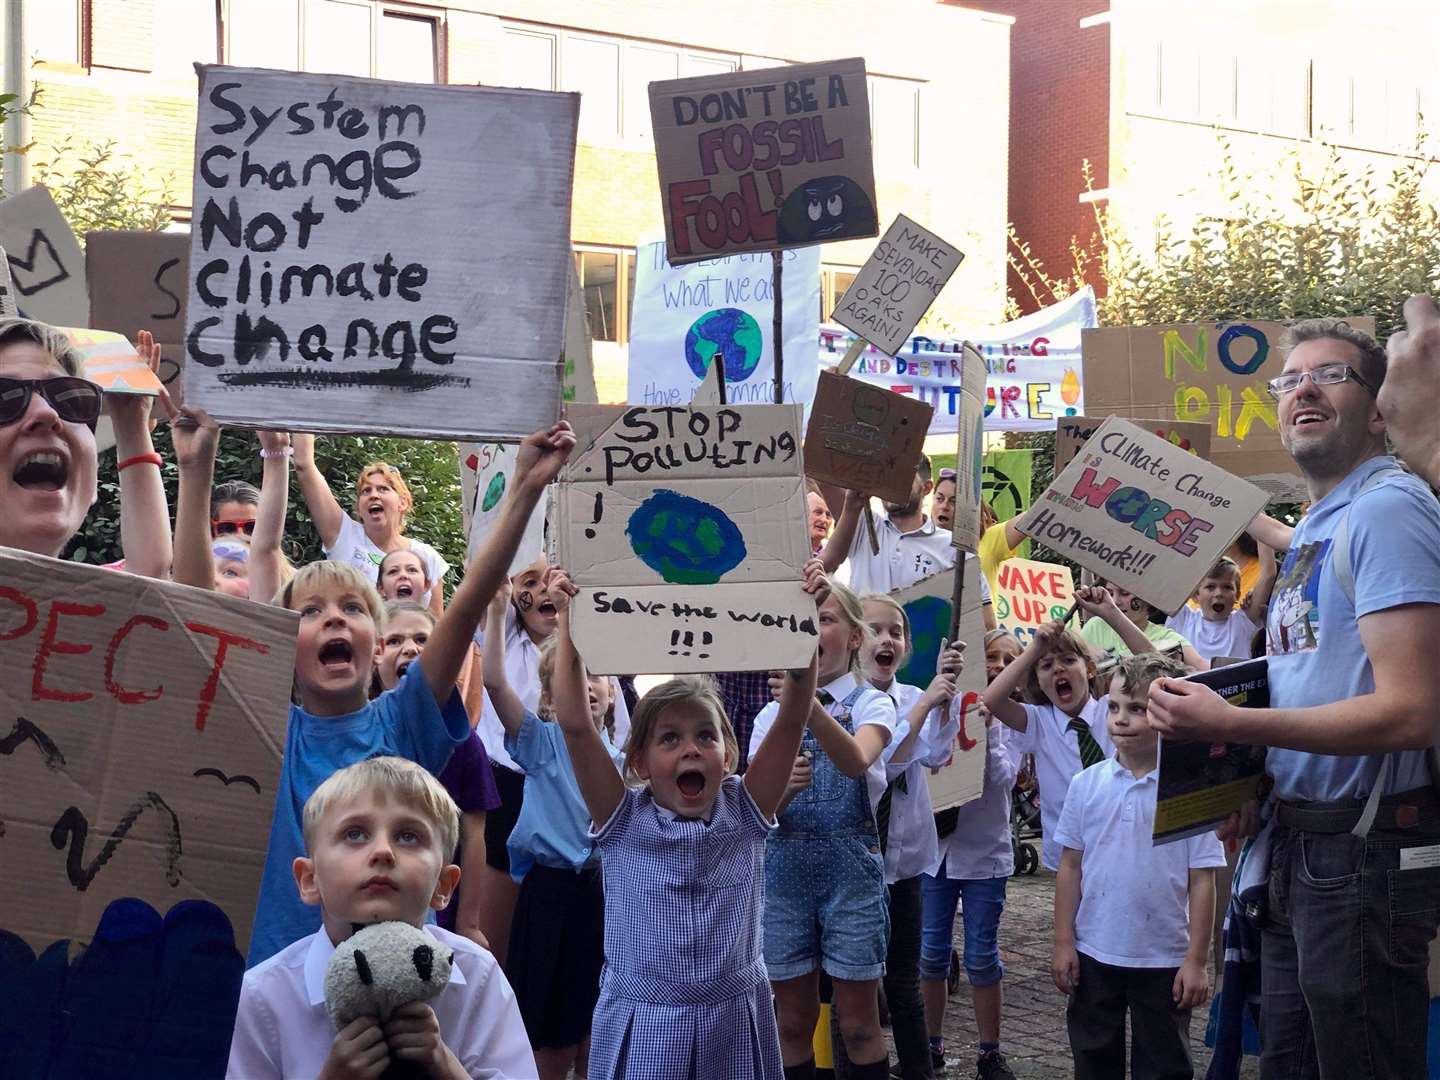 The children's climate strike in Sevenoaks in September 2019